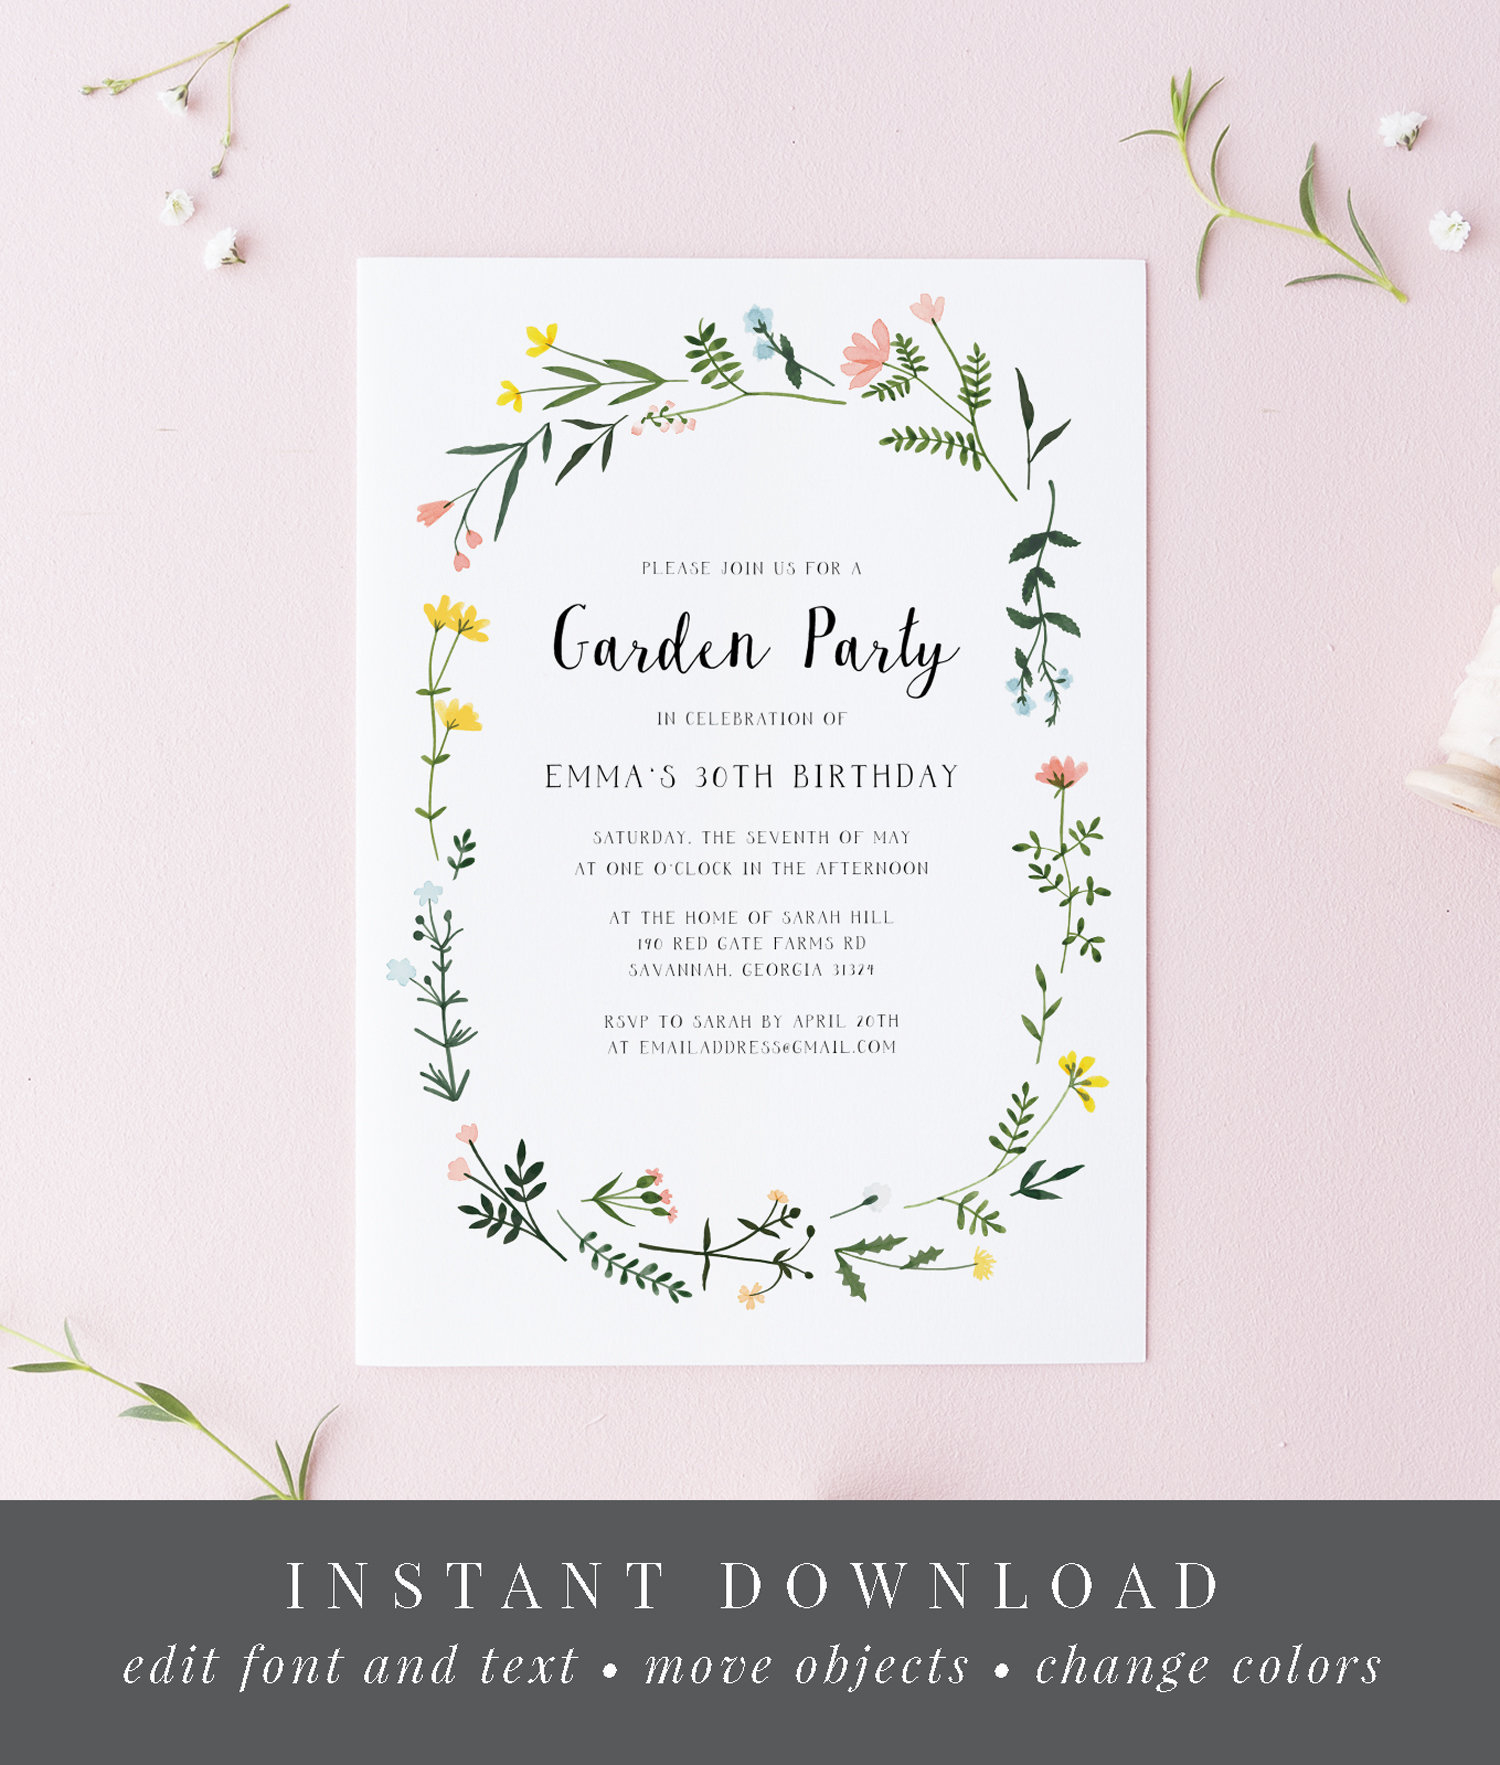 Garden Party Invitation Template • Business Template Ideas